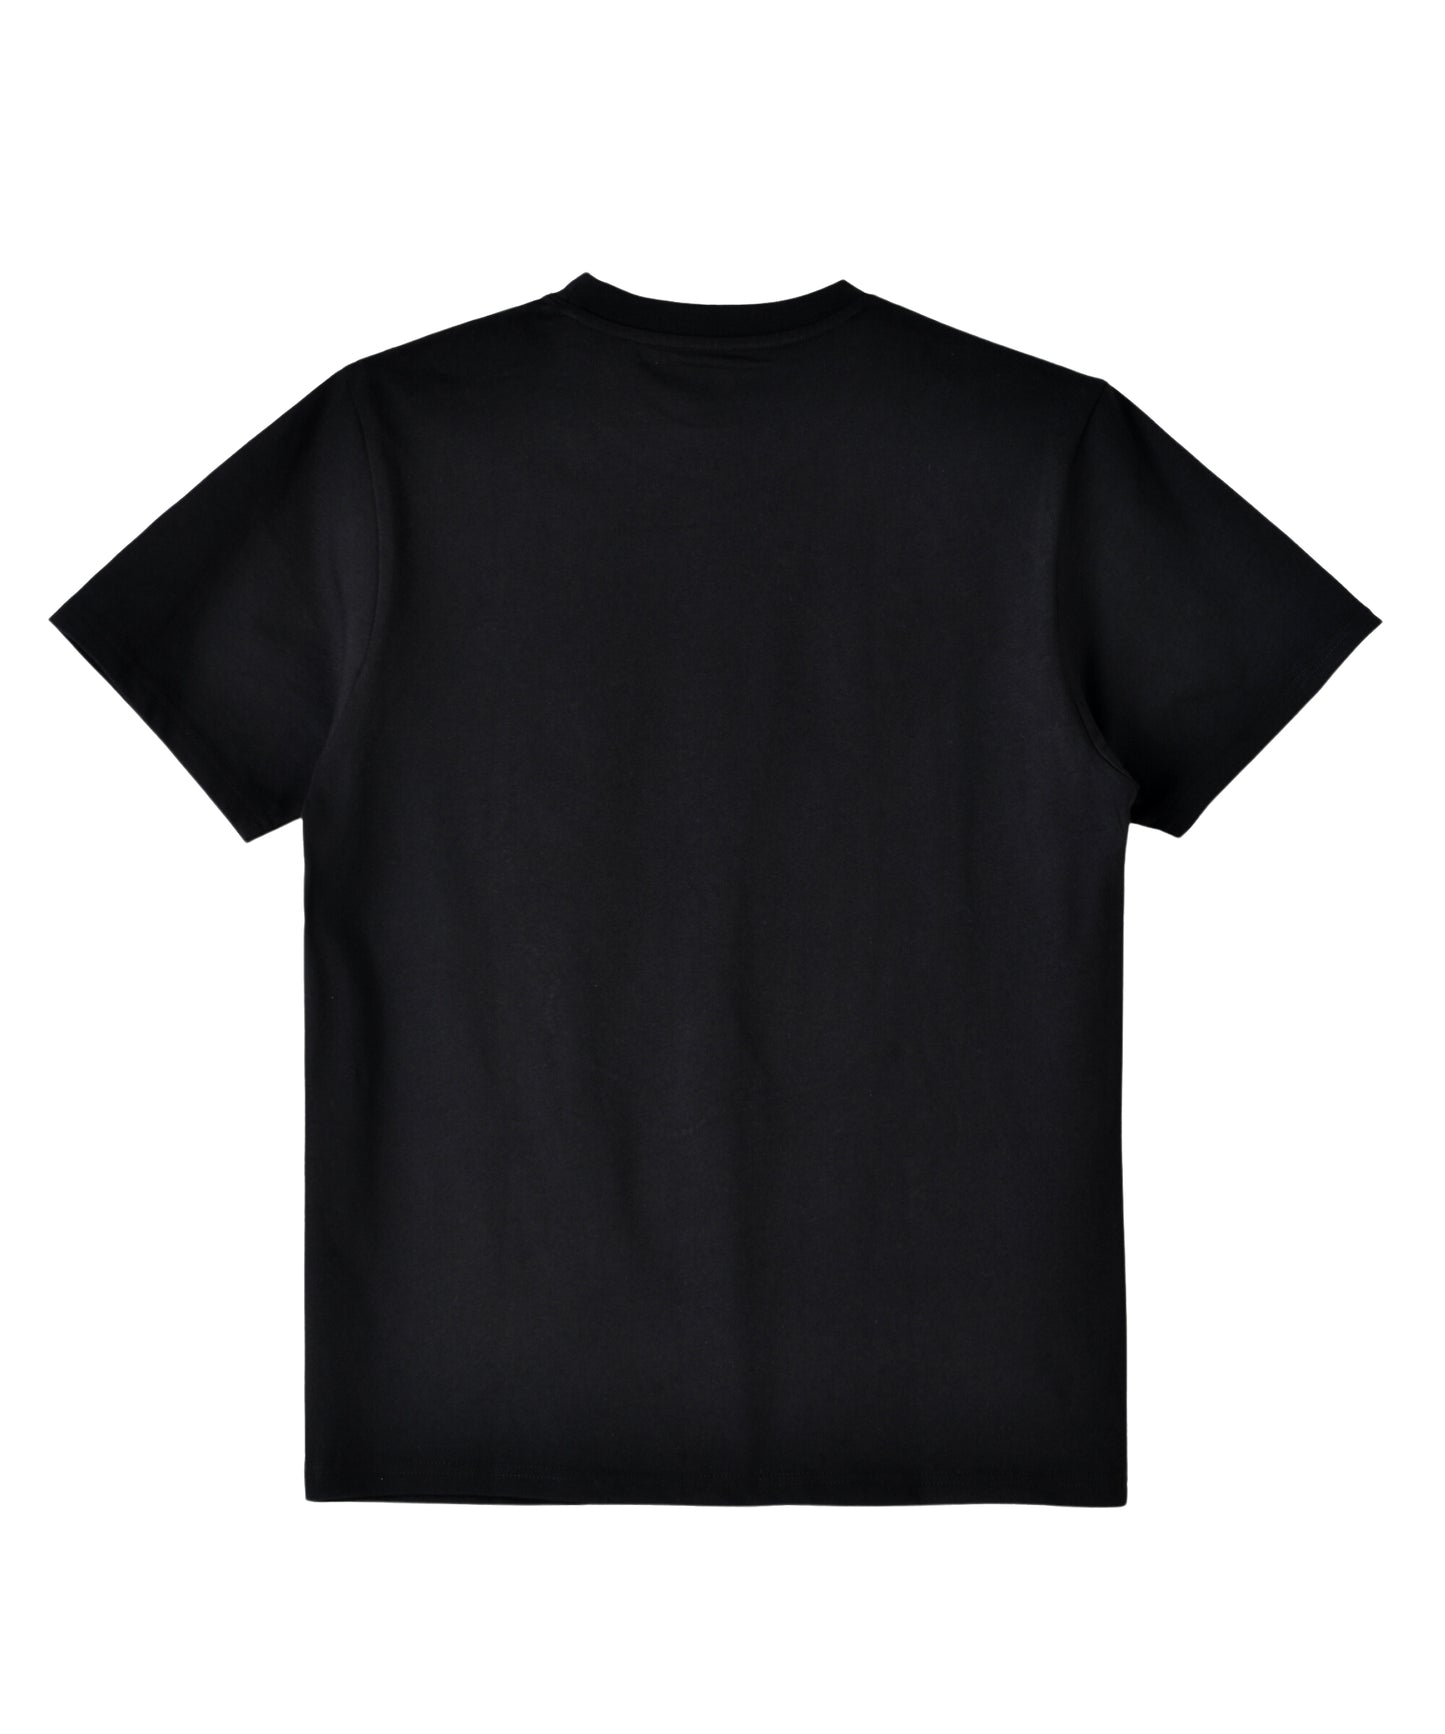 Men Rhinestone Angel Statue T-shirt in Black